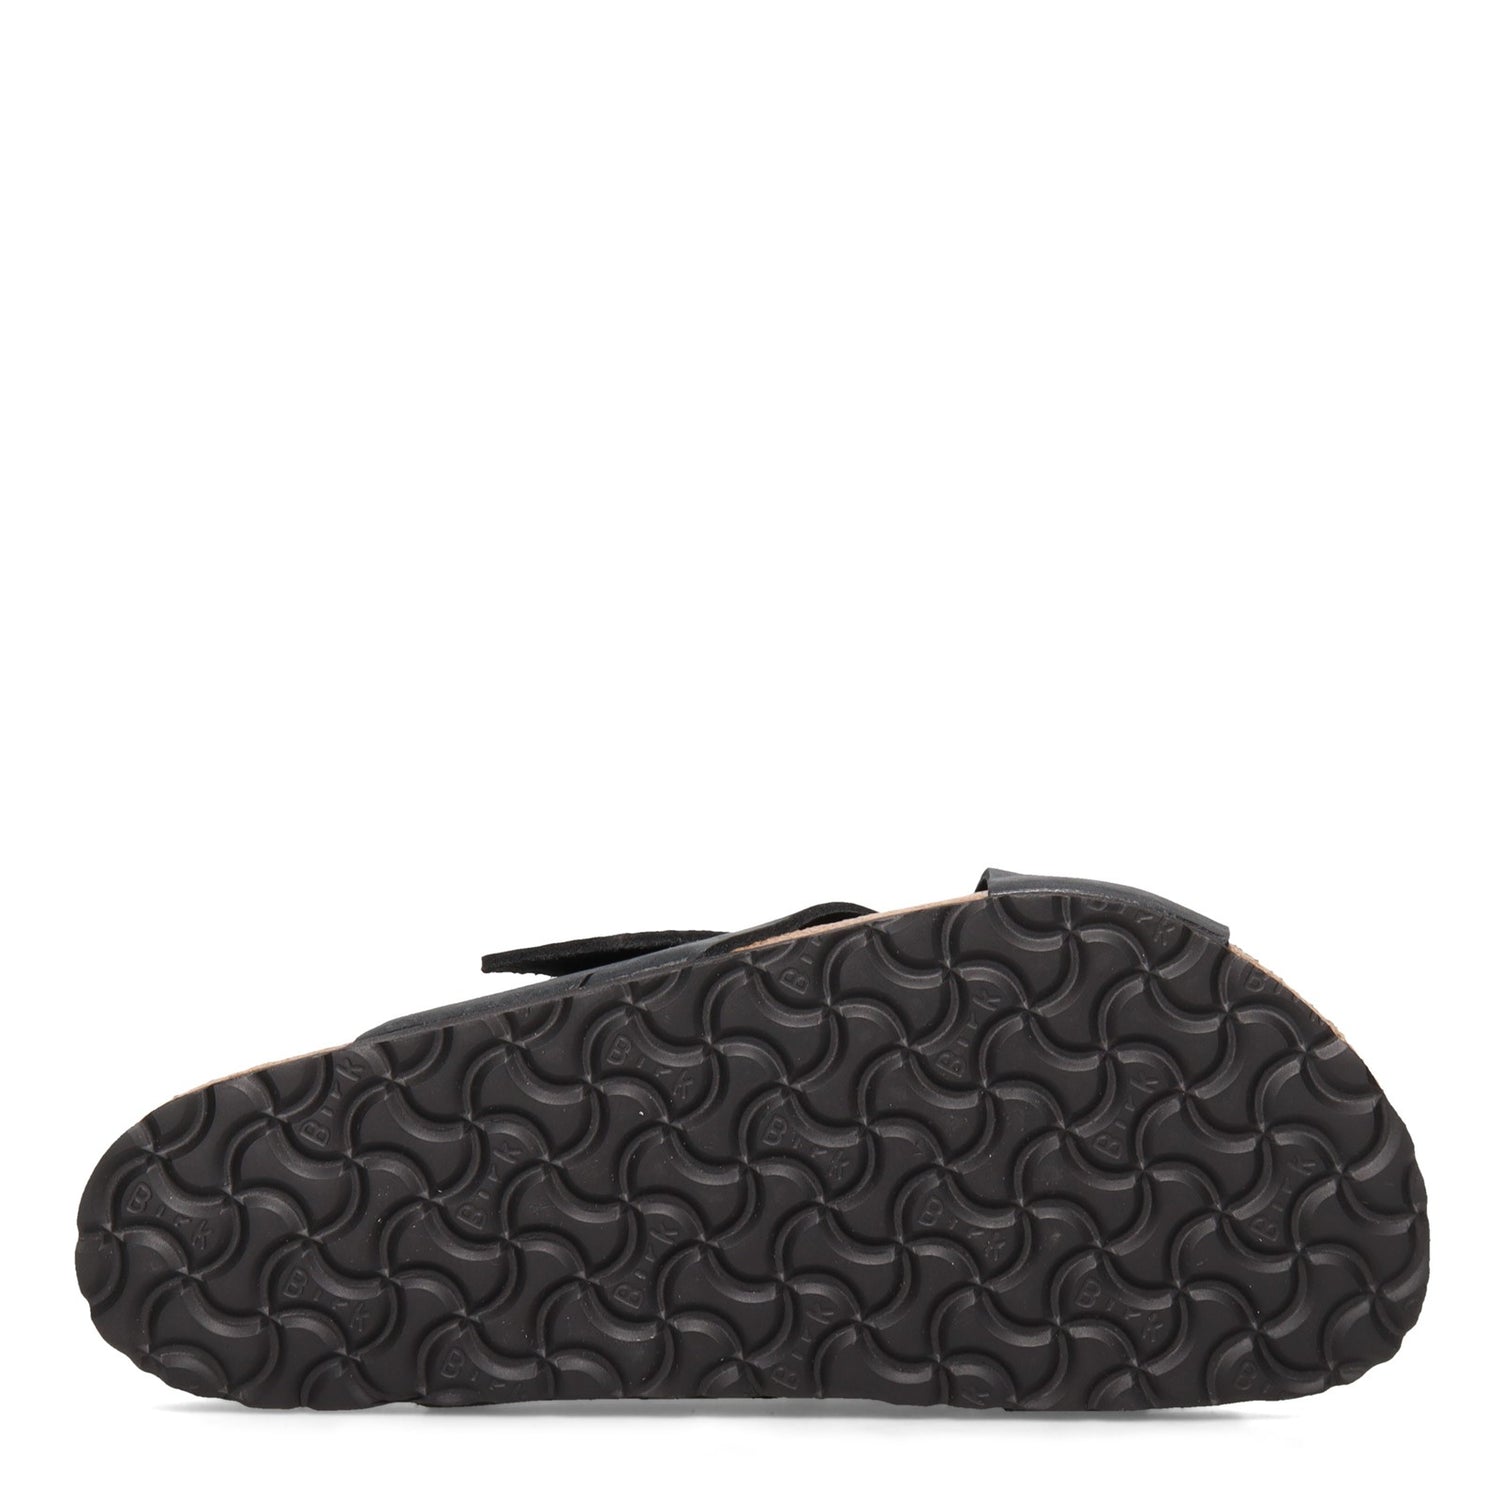 Peltz Shoes  Men's Birkenstock Lugano Sandal - Regular Width BLACK R 1017 465